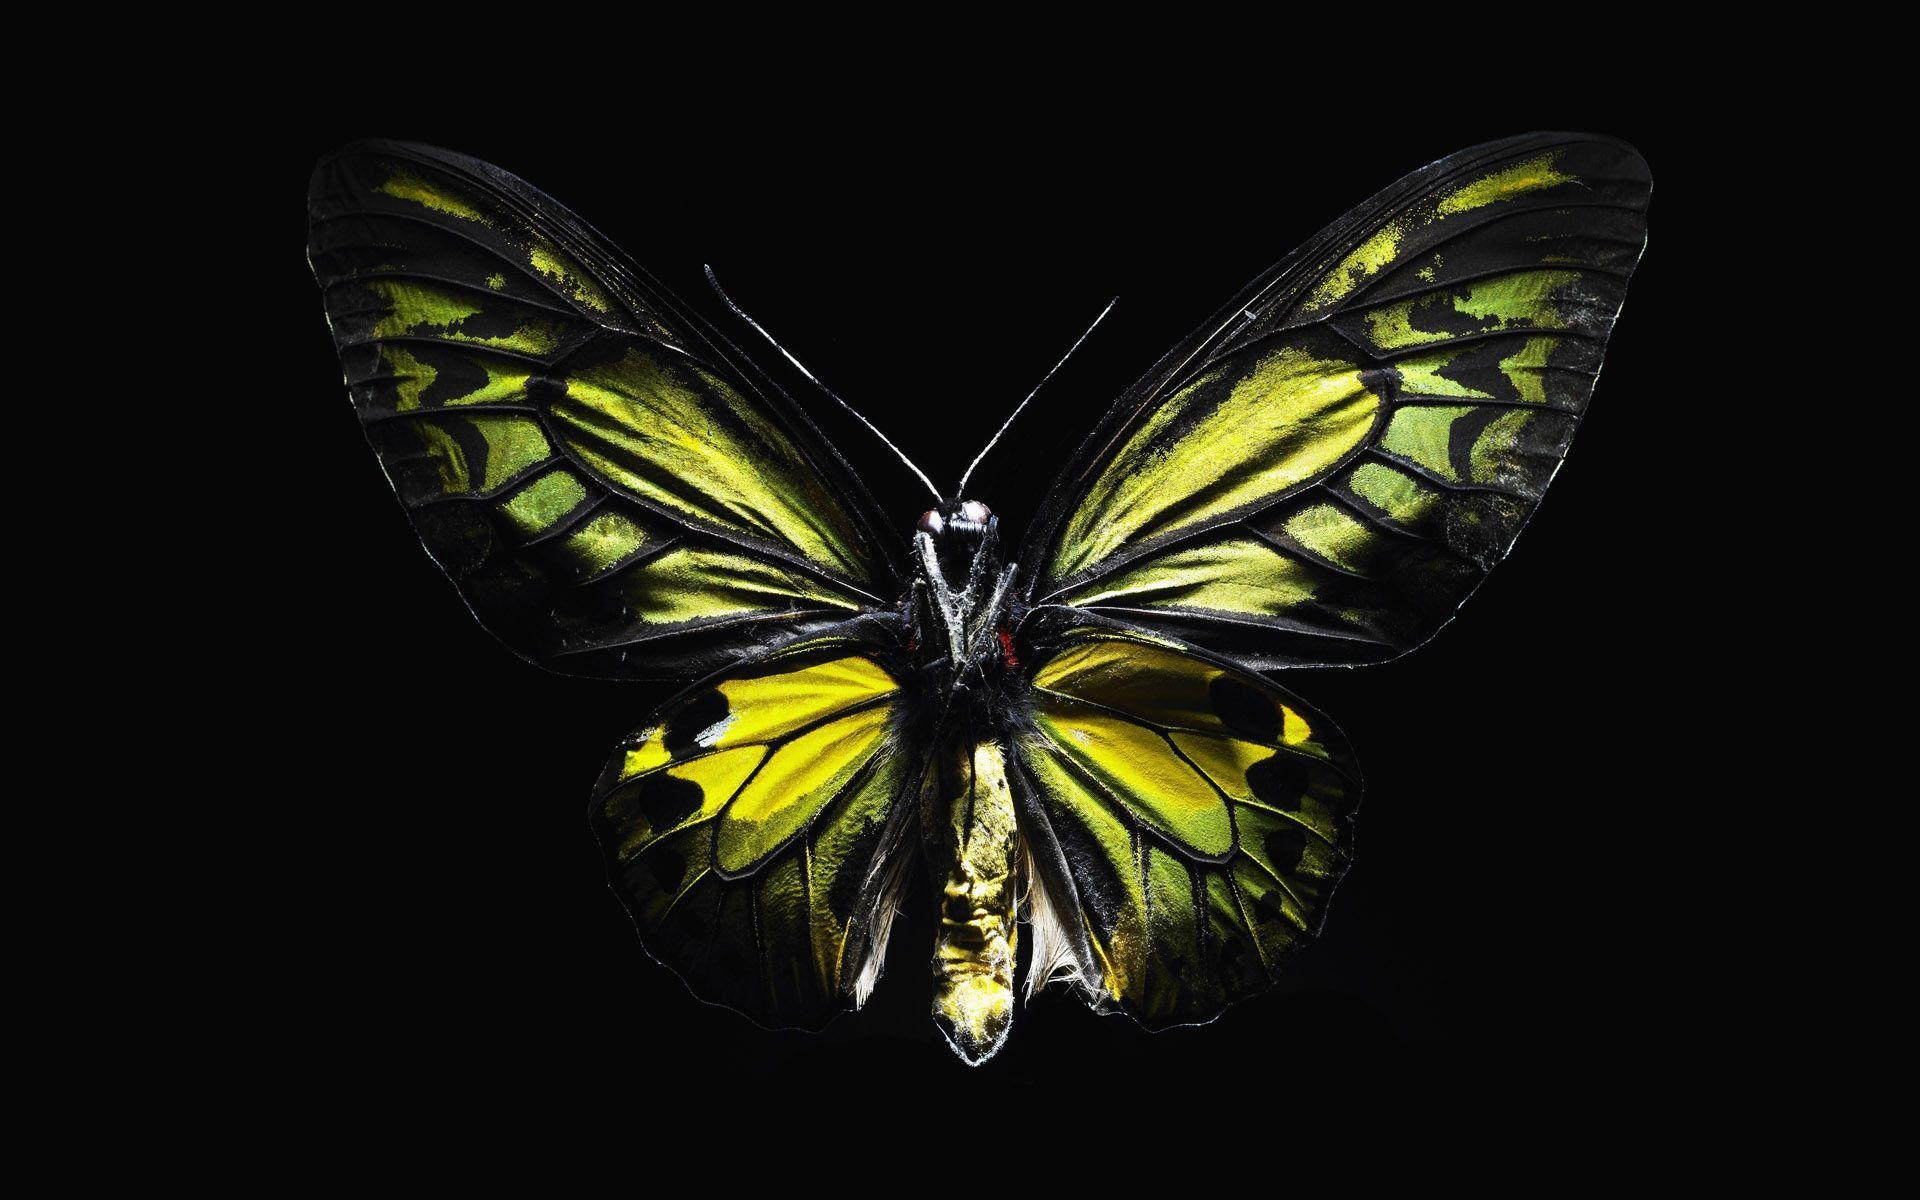 Download wallpaper: gree butterfly, green butterfly on black